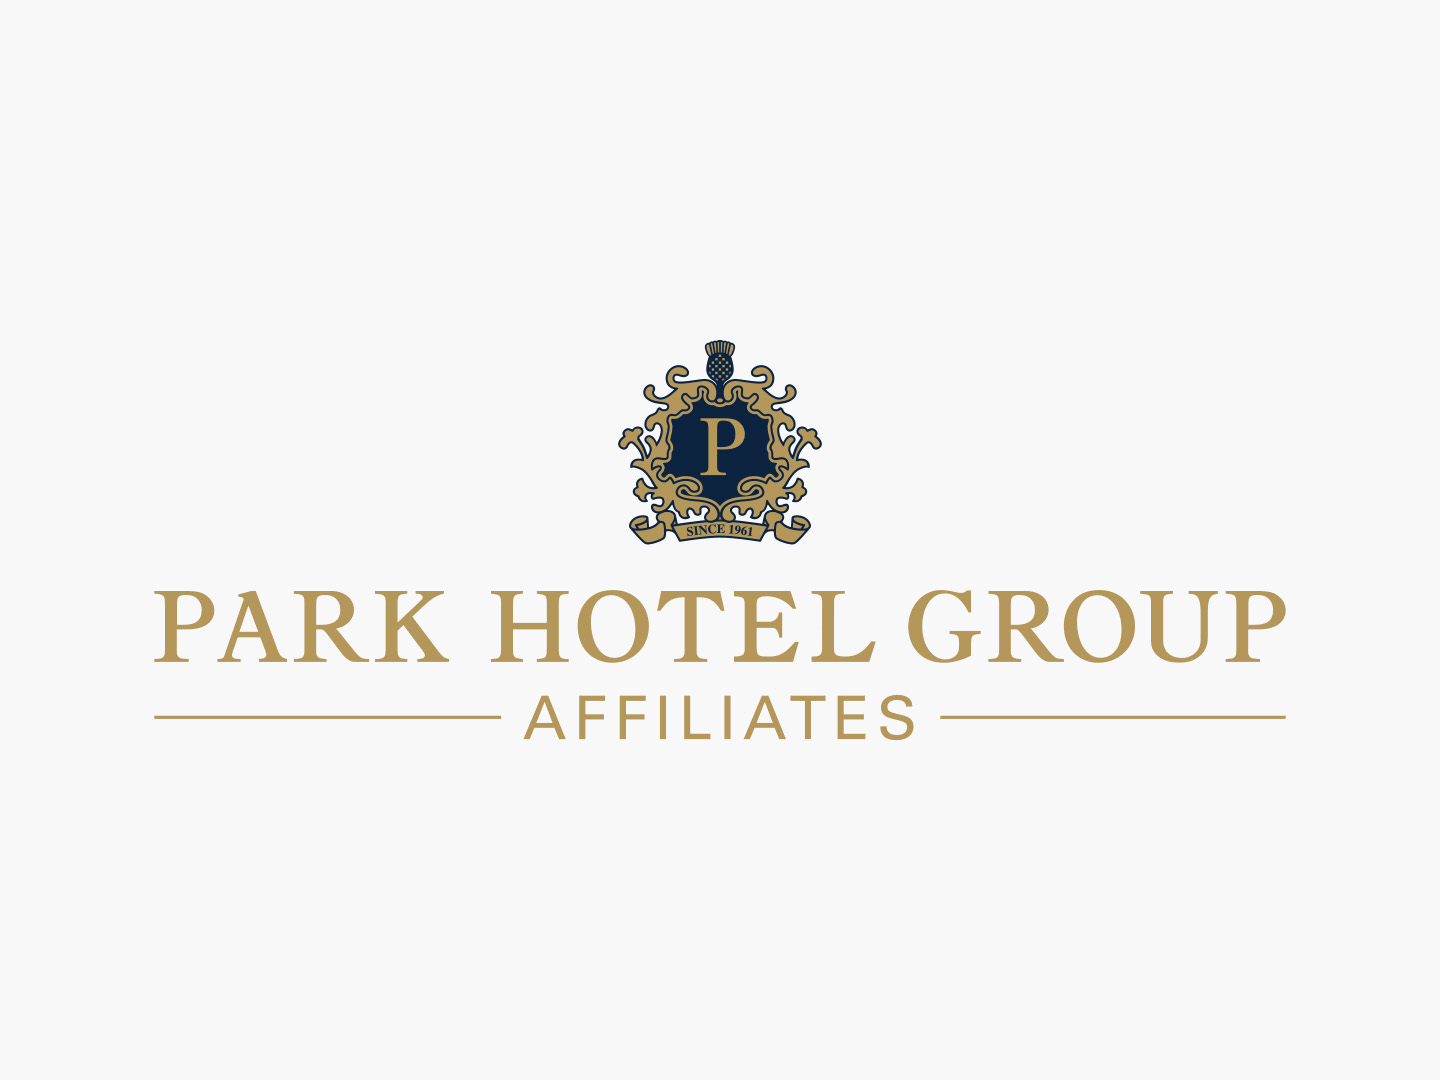 Park Hotel Group Affiliates